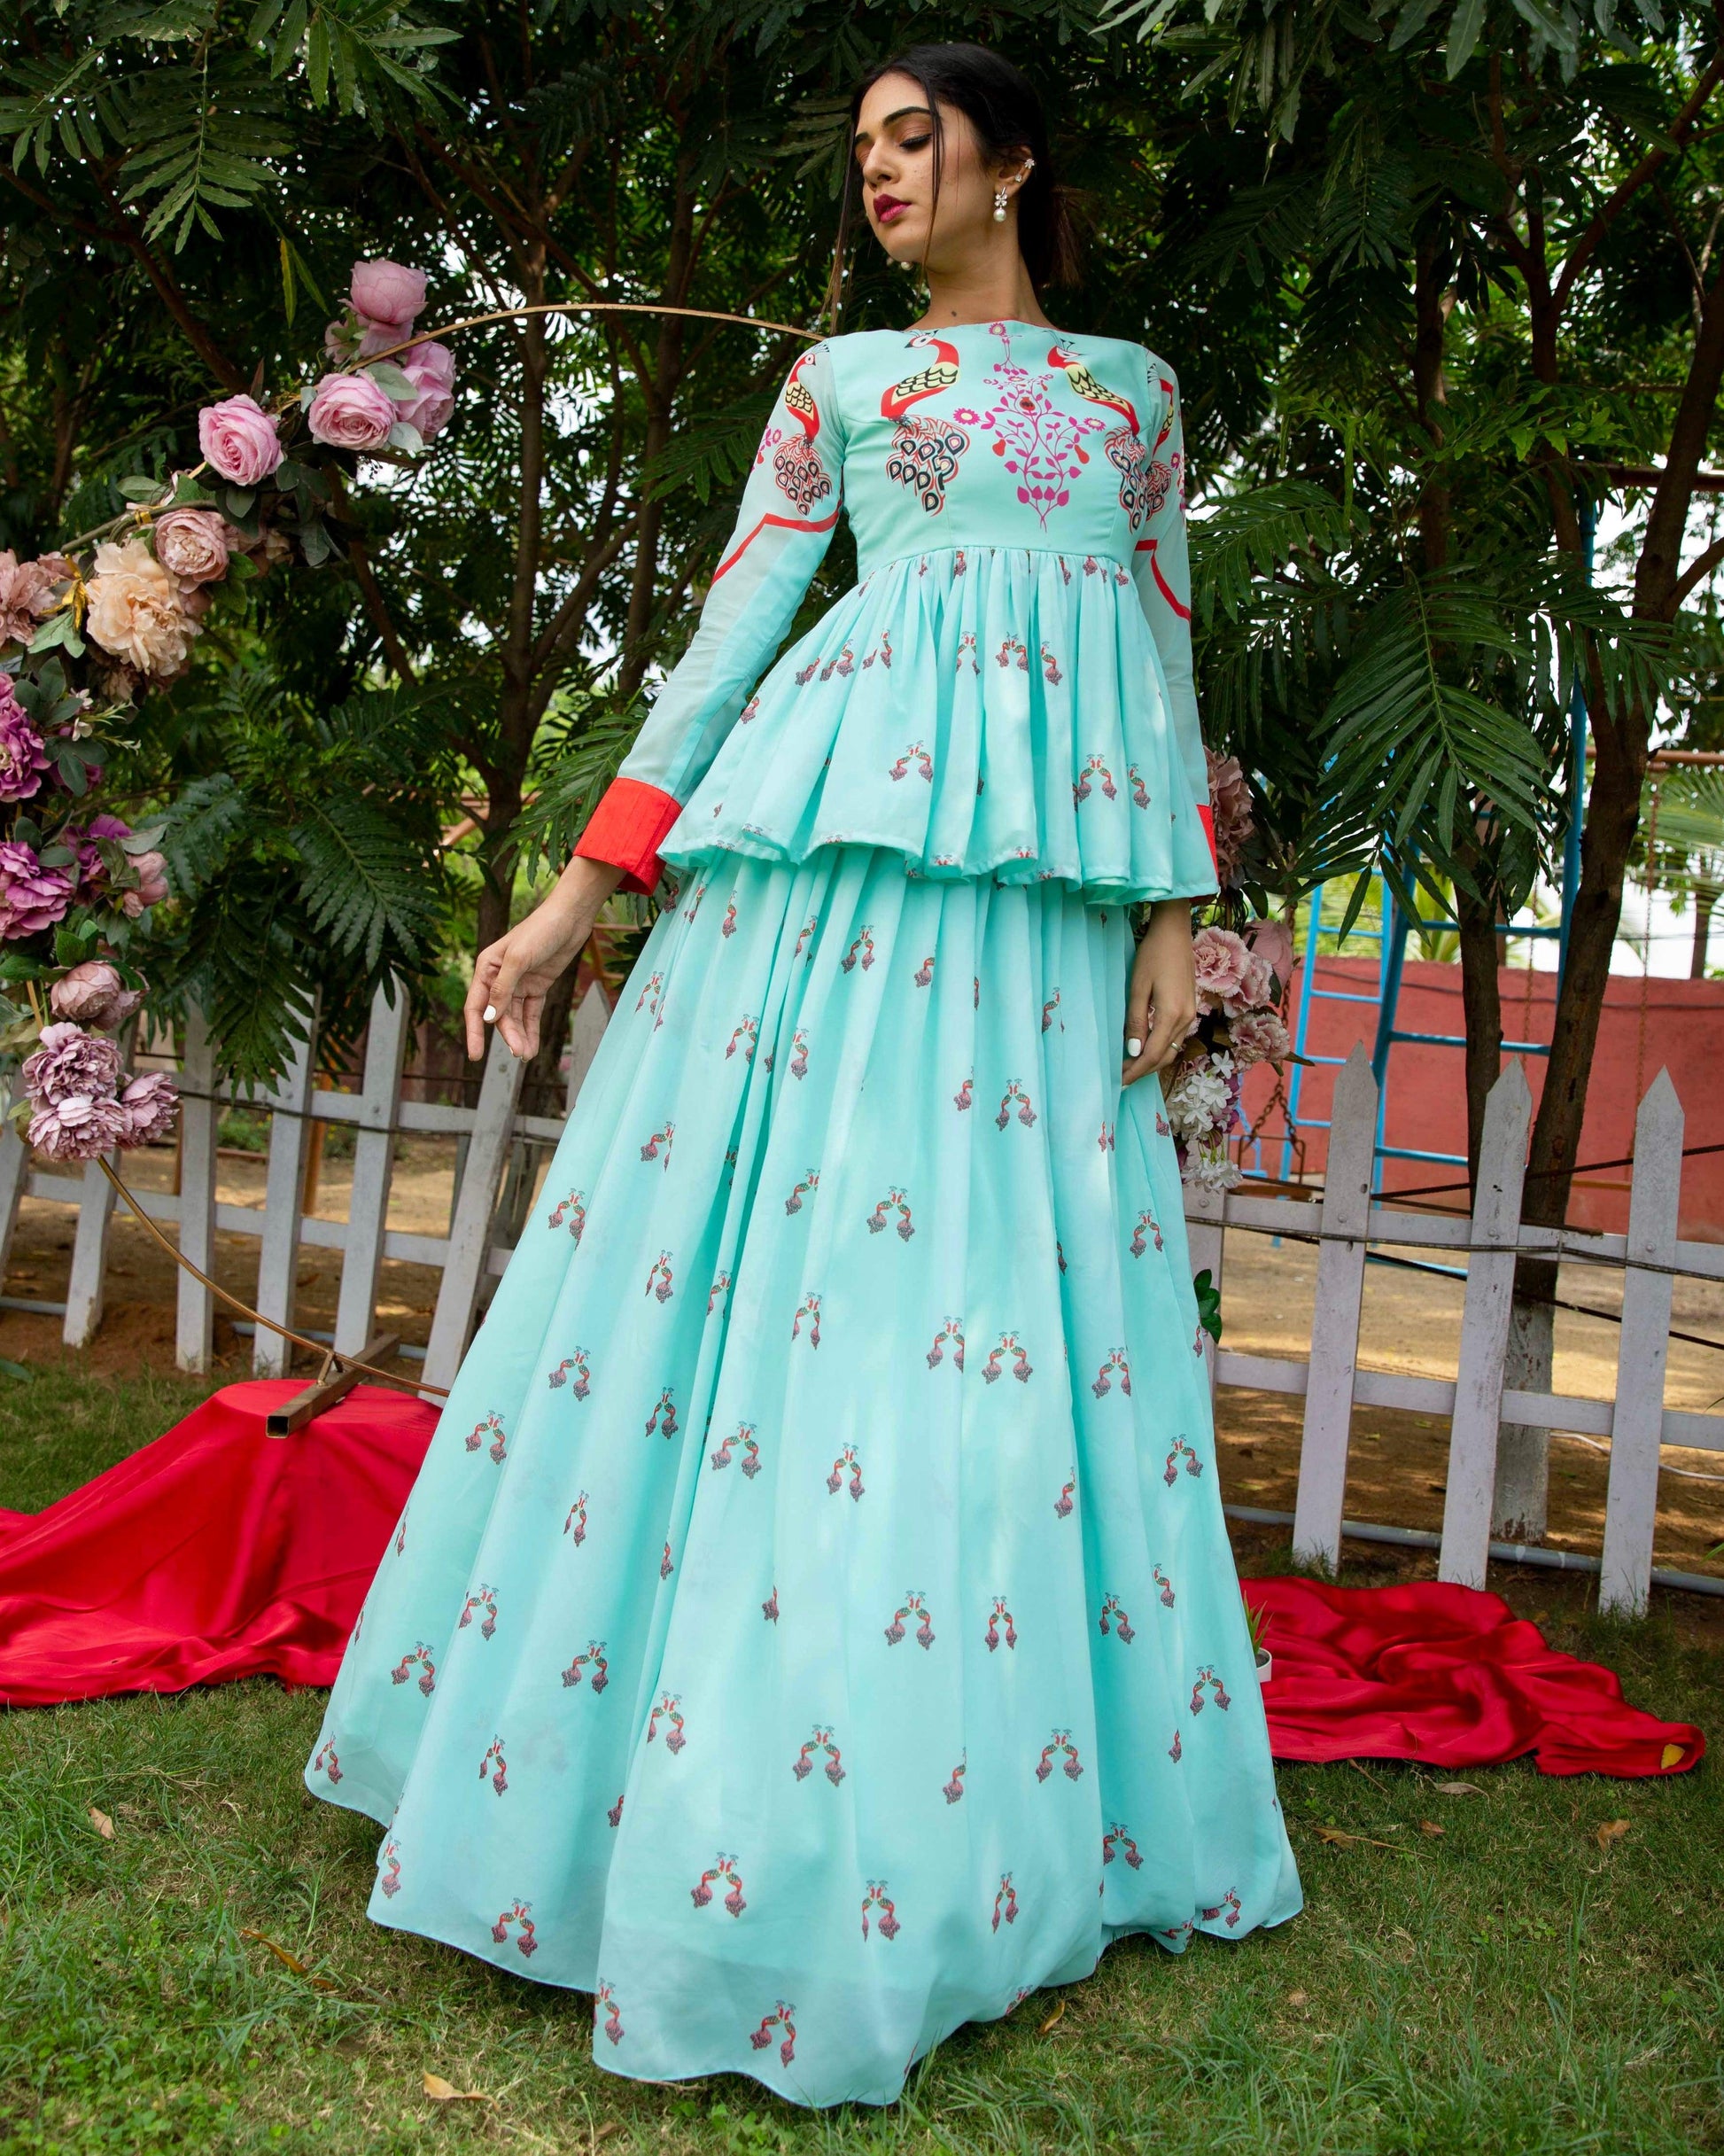 Printed peplum topped skirt in sea-green - Nishi Madaan Label